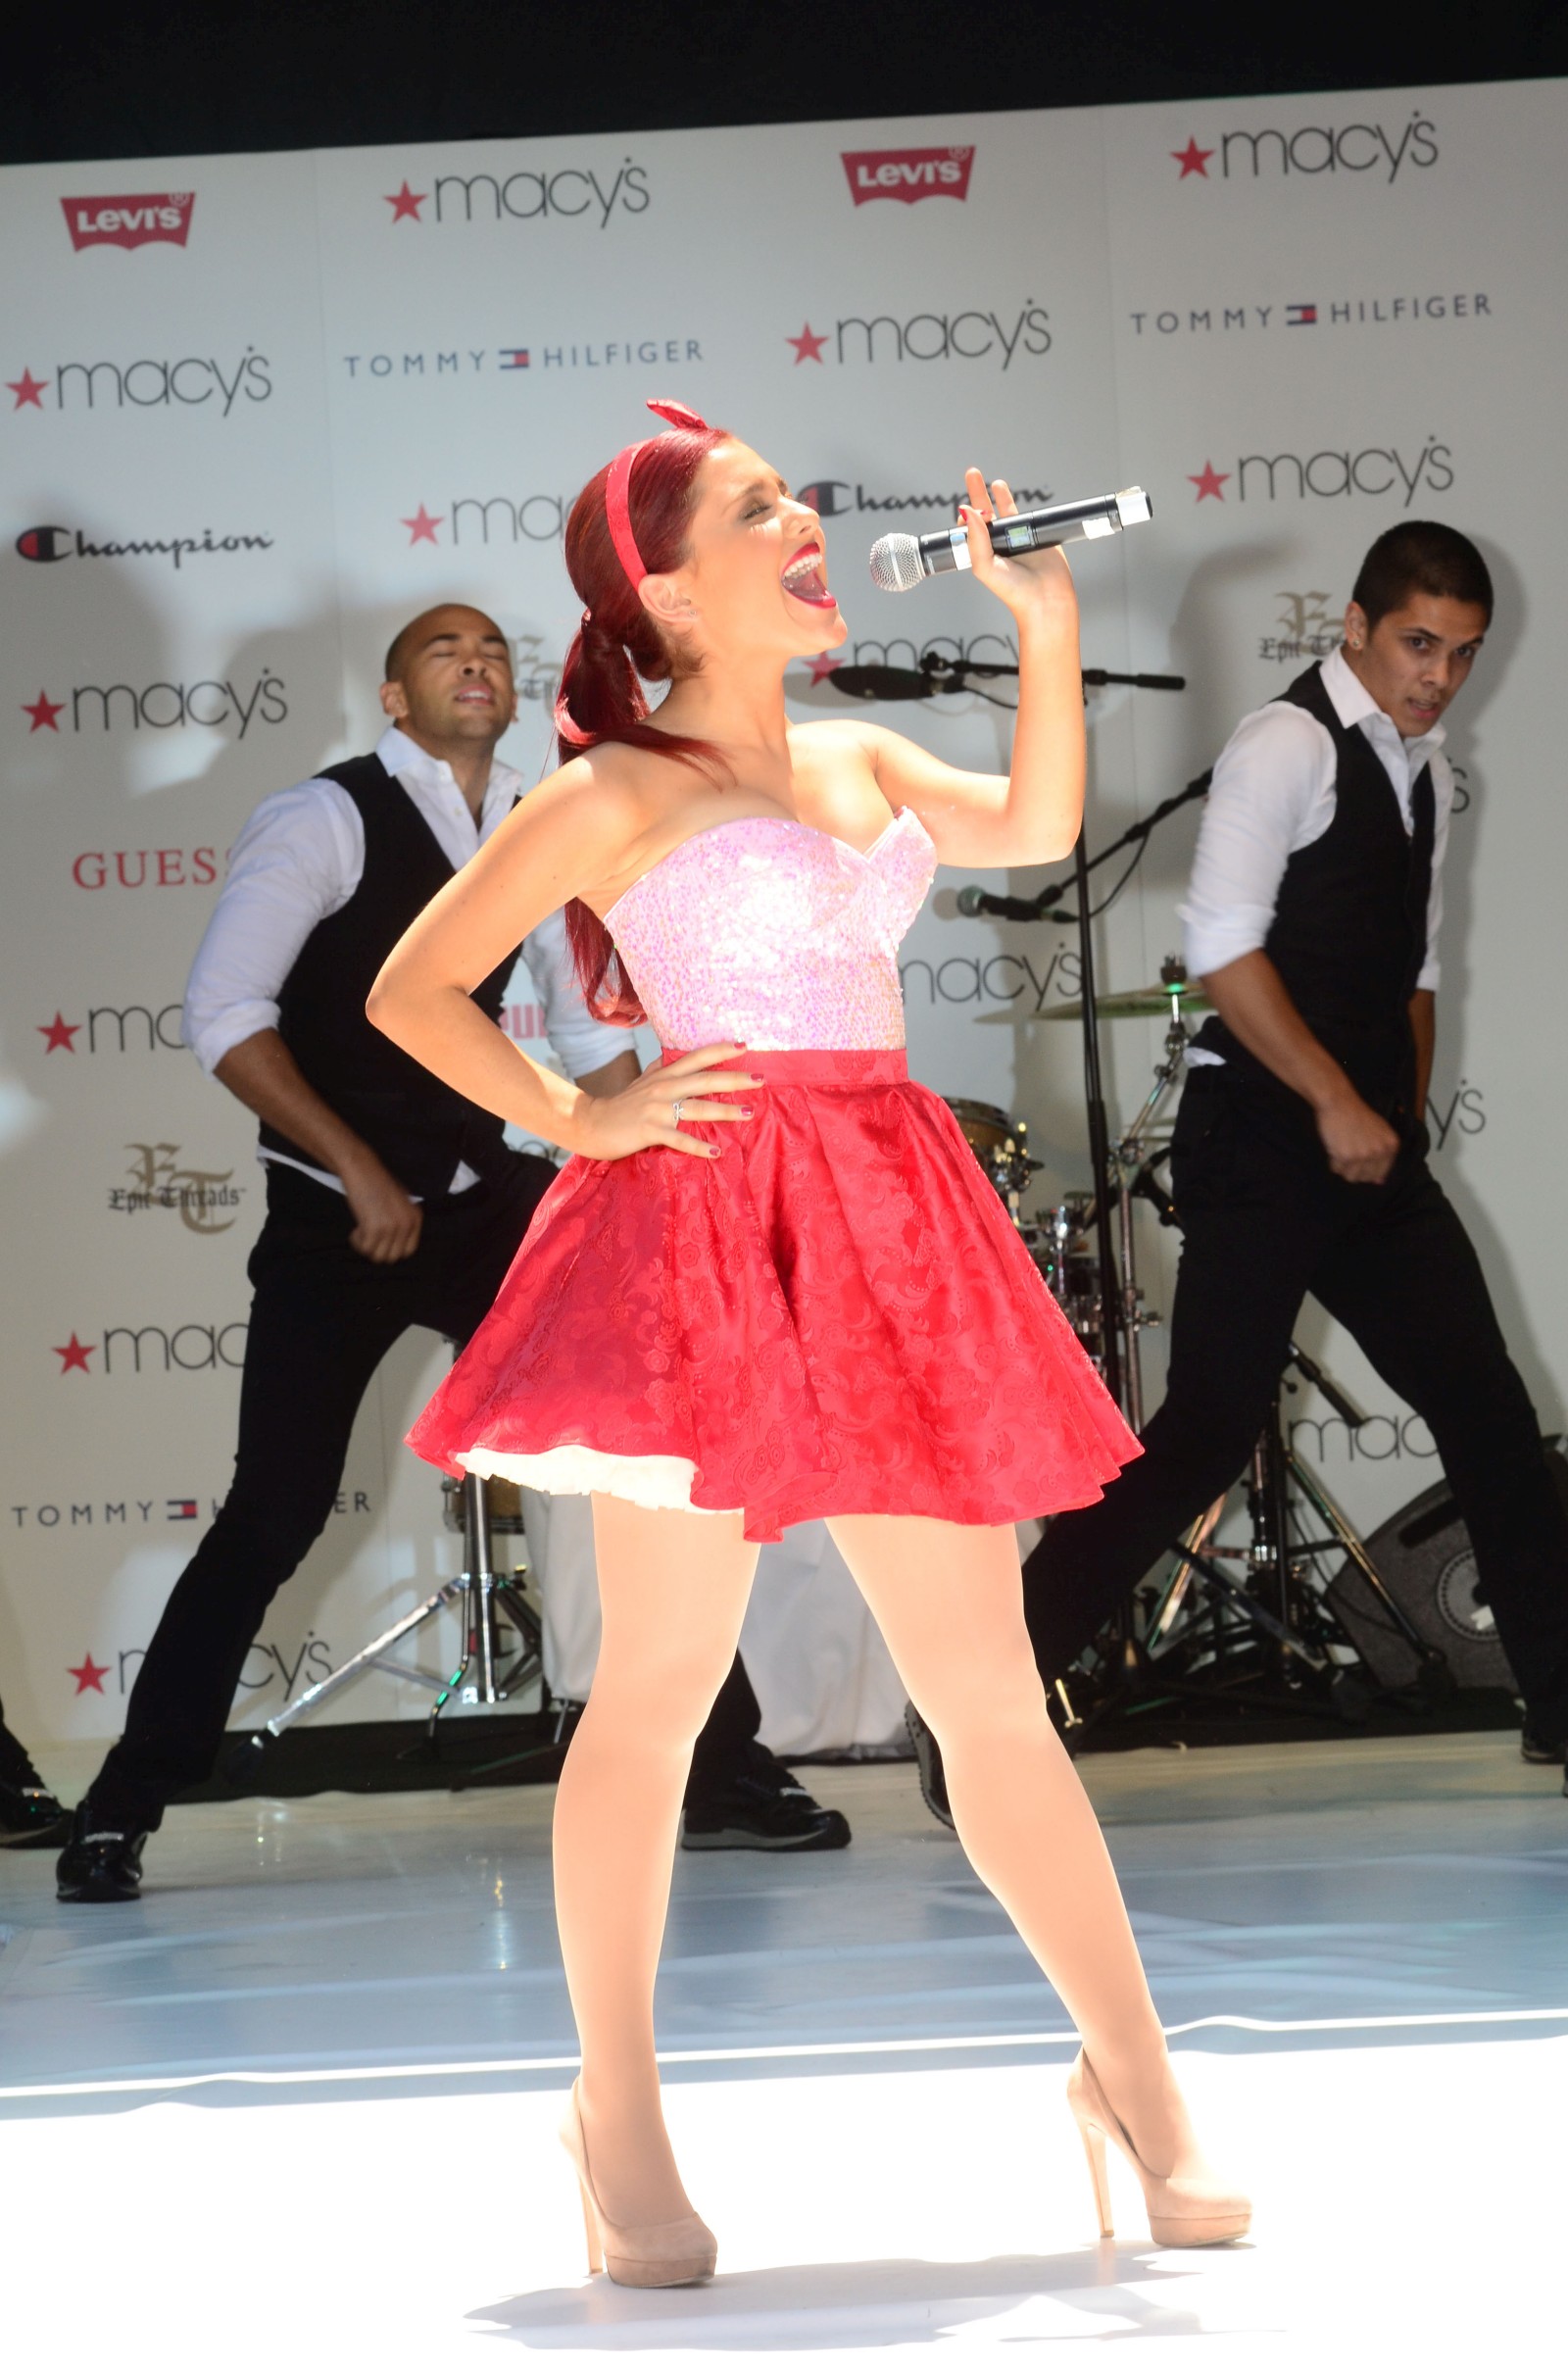 ariana-grande-performing-at-macy-s-annual-summer-blowout-show-photos-489143.jpg